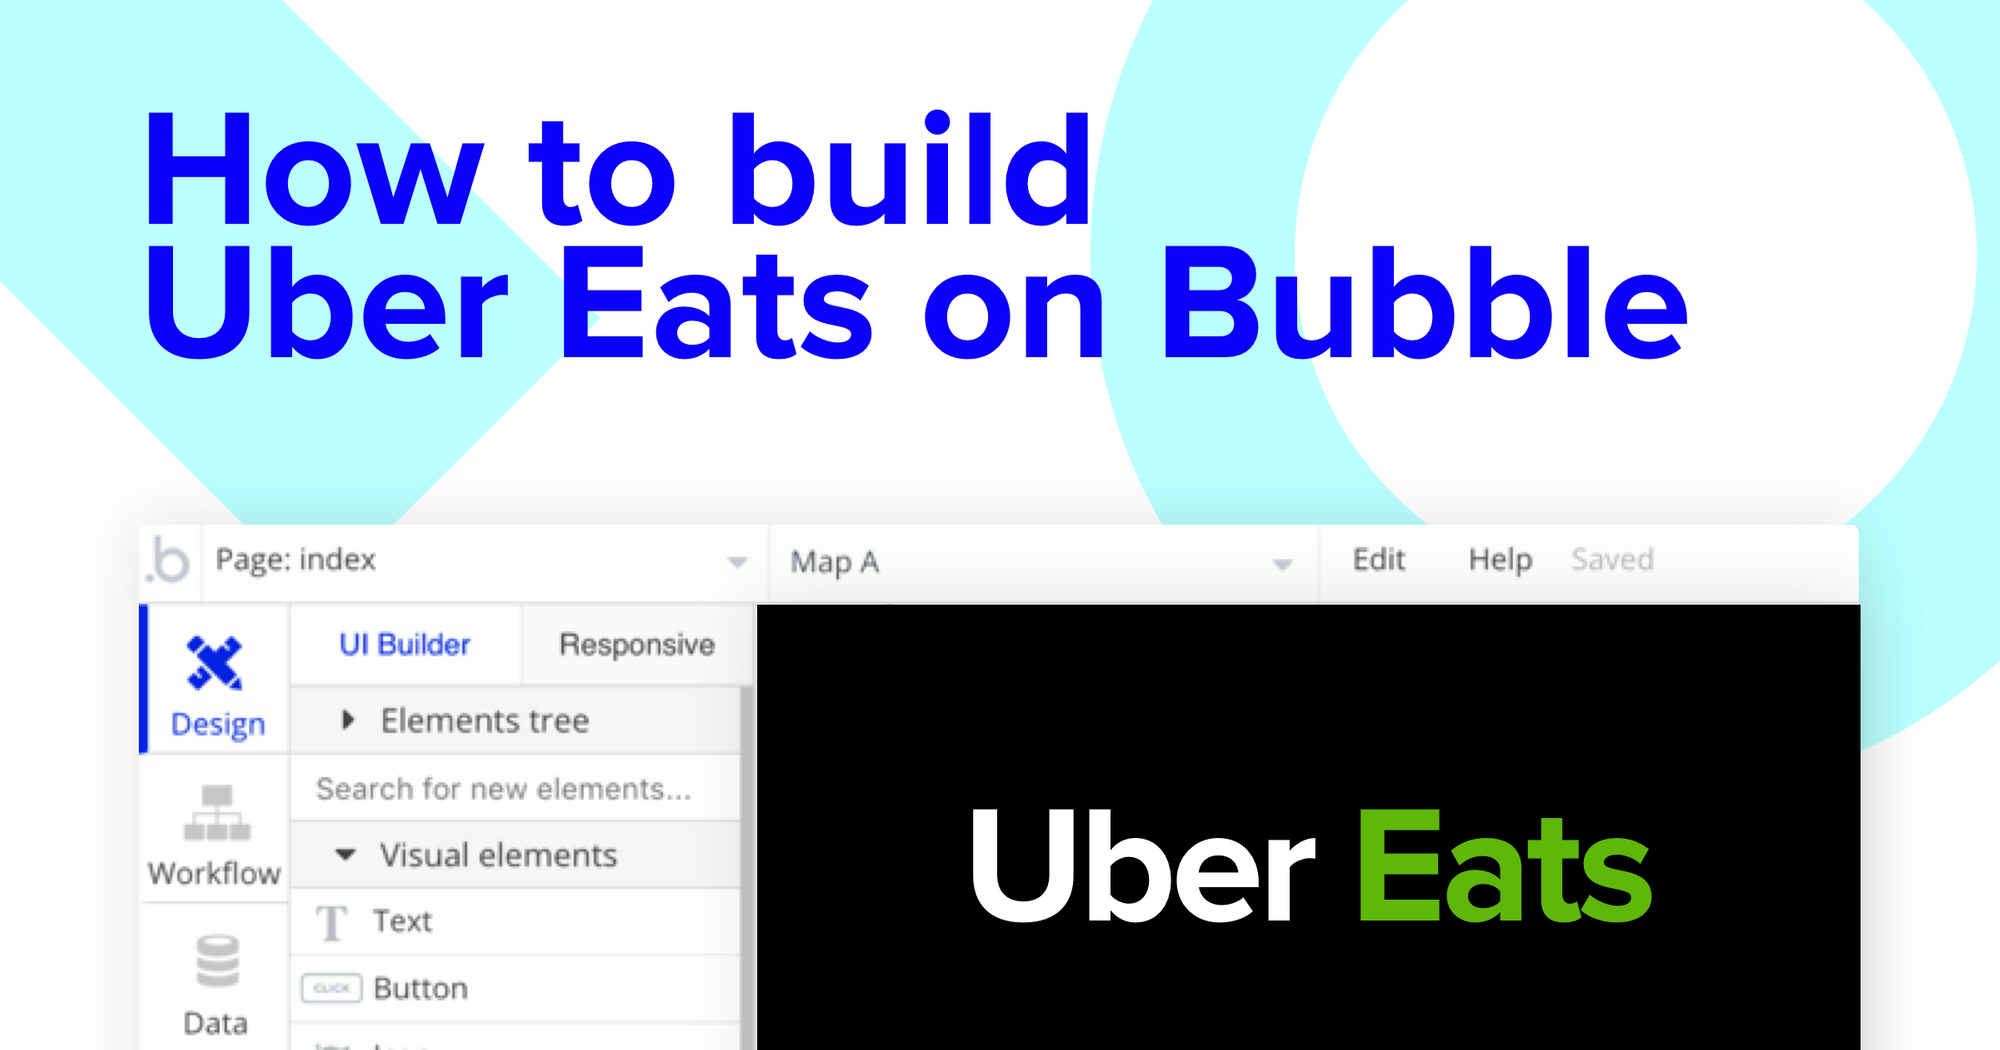 Aplicativo delivery Uber Eats no Bubble